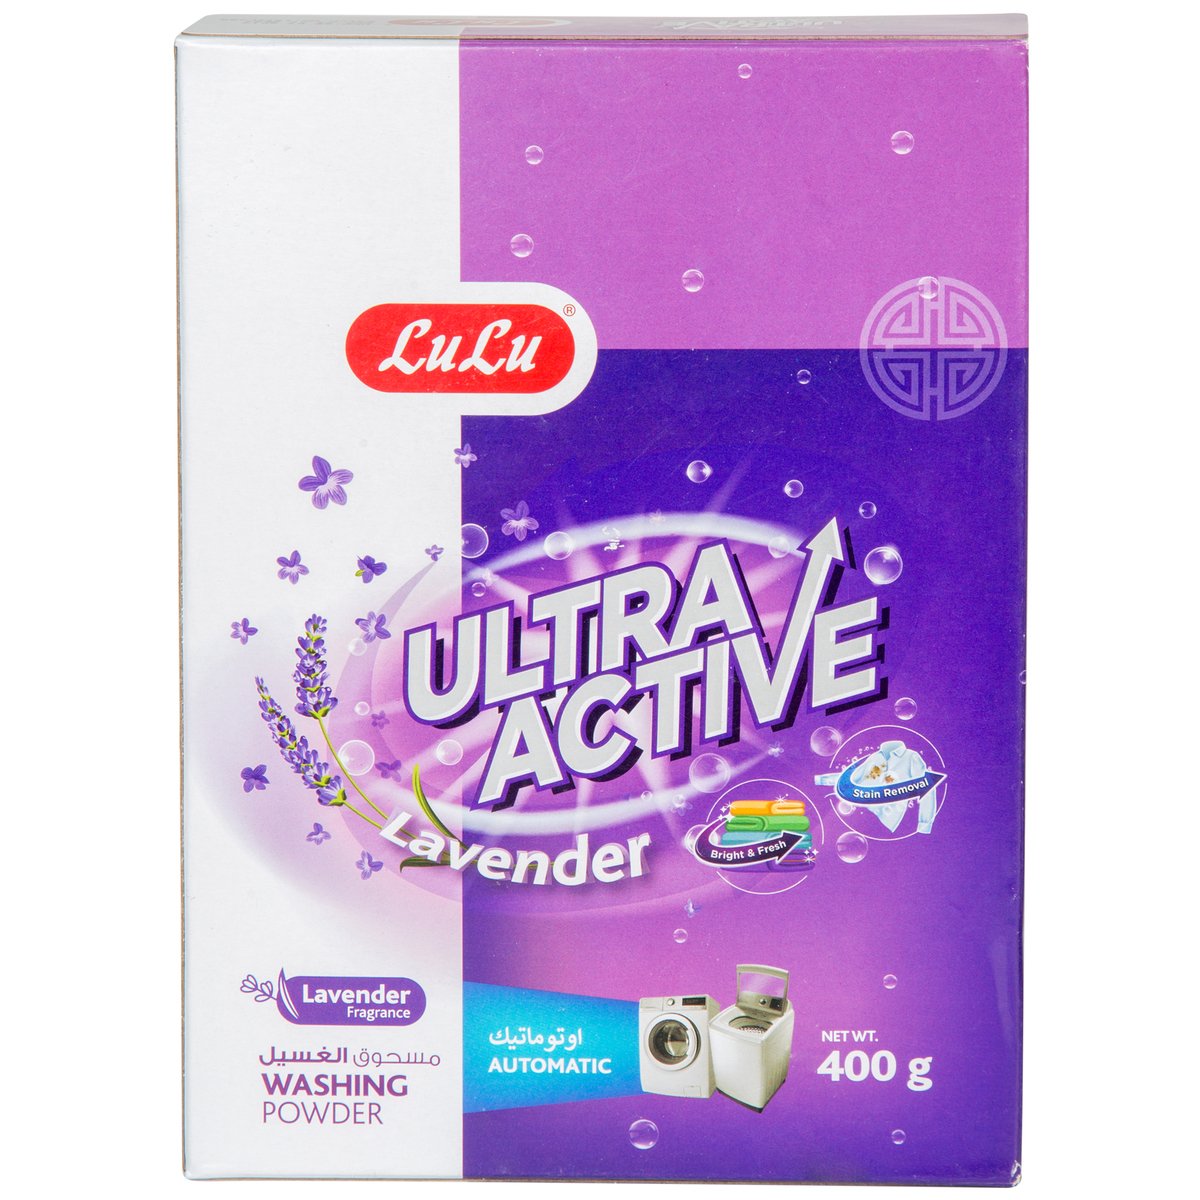 LuLu Ultra Active Washing Powder Lavender 400g